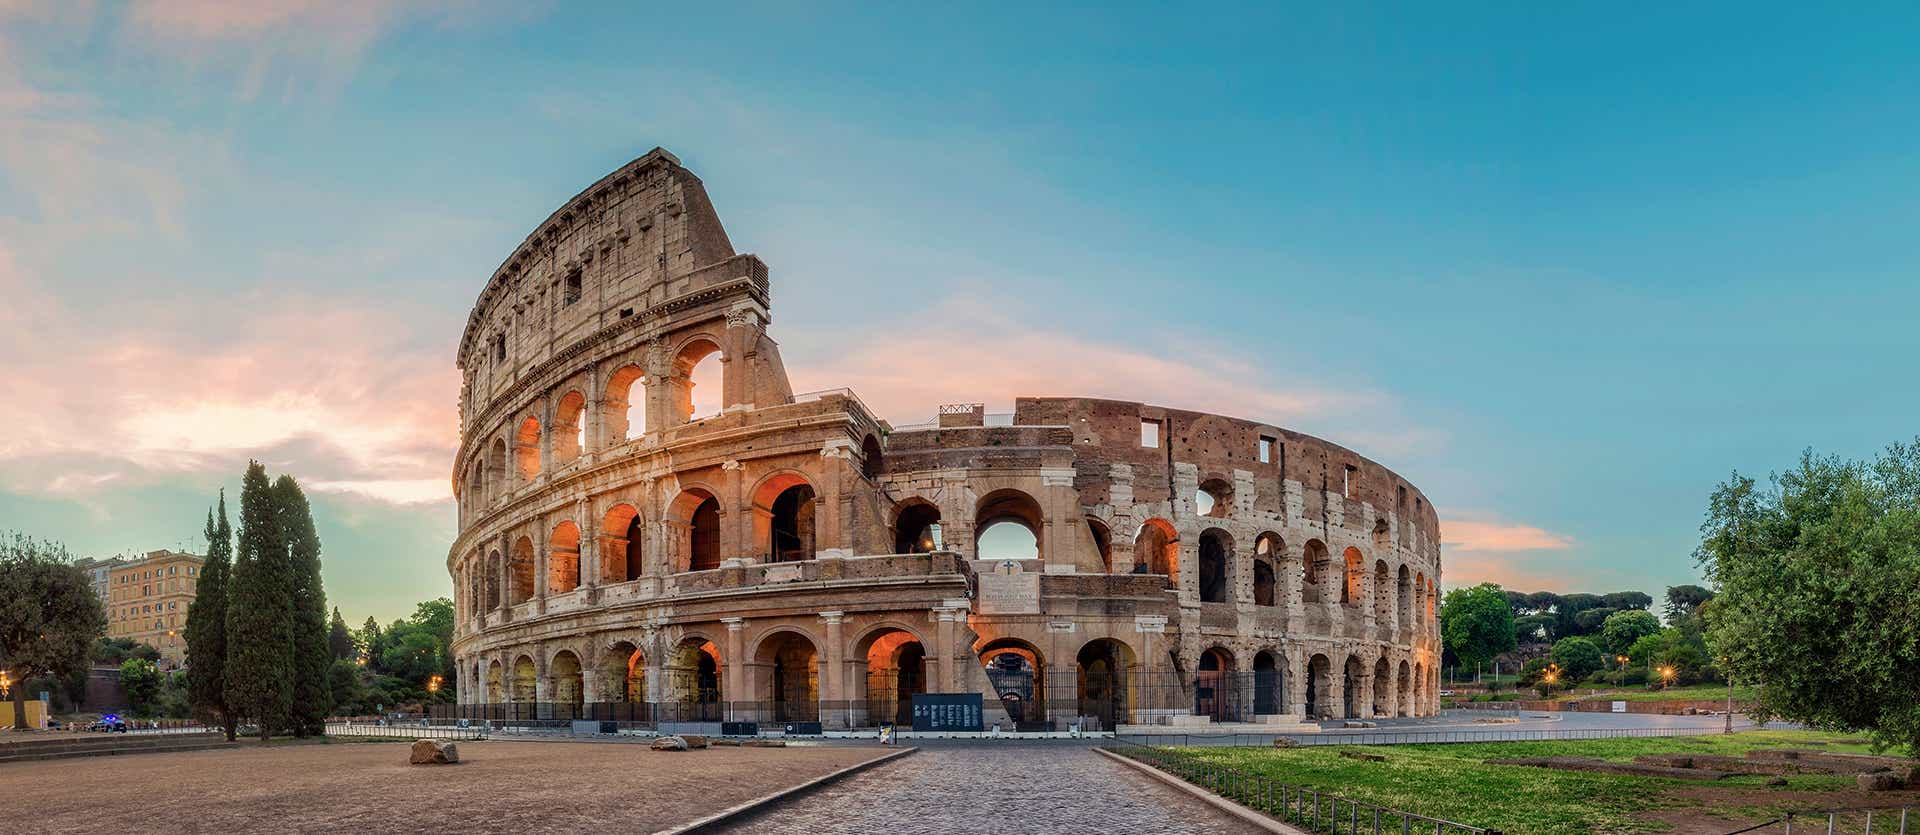 Colosseum <span class="iconos separador"></span> Rome <span class="iconos separador"></span> Italy